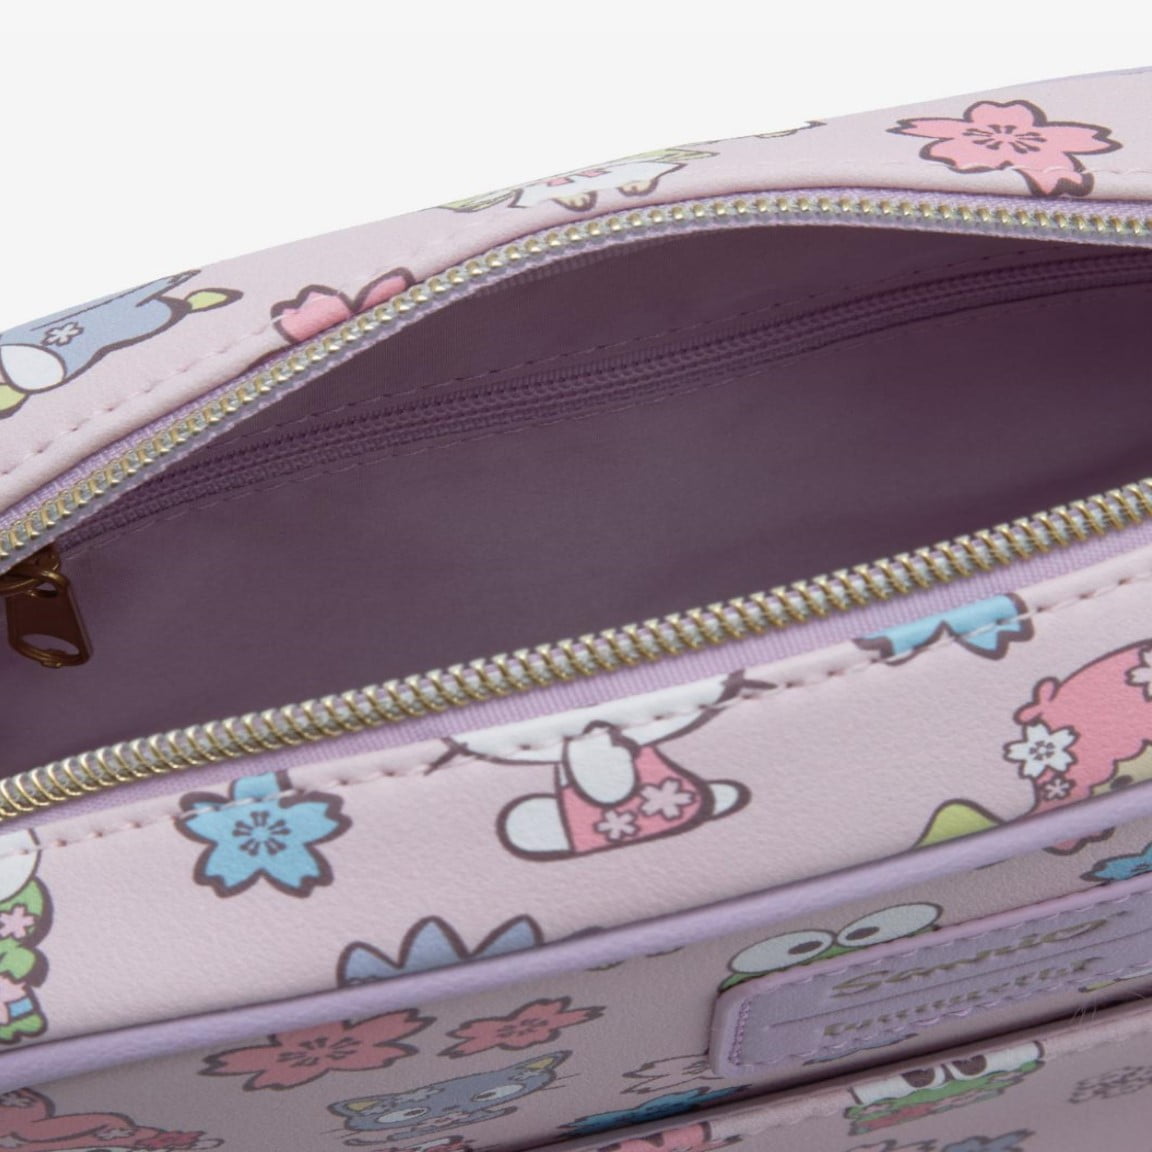 Sanrio: Hello Kitty & Friends Loungefly Crossbody Bag • Showcase US